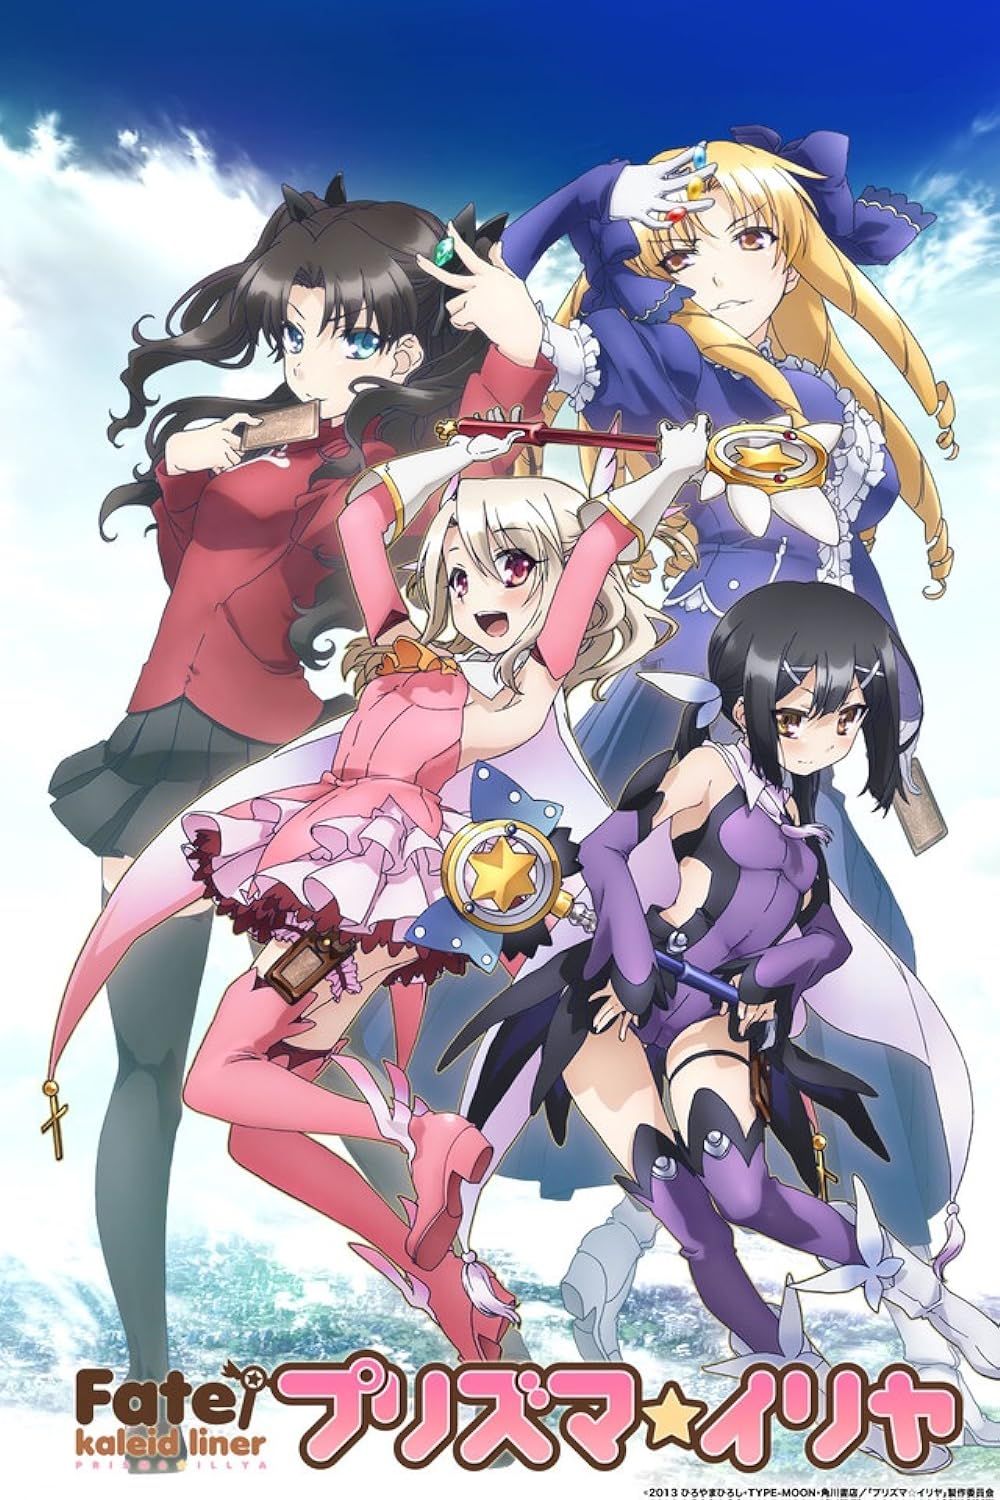 Fate:kaleid liner Prisma Illya (2013) anime series poster